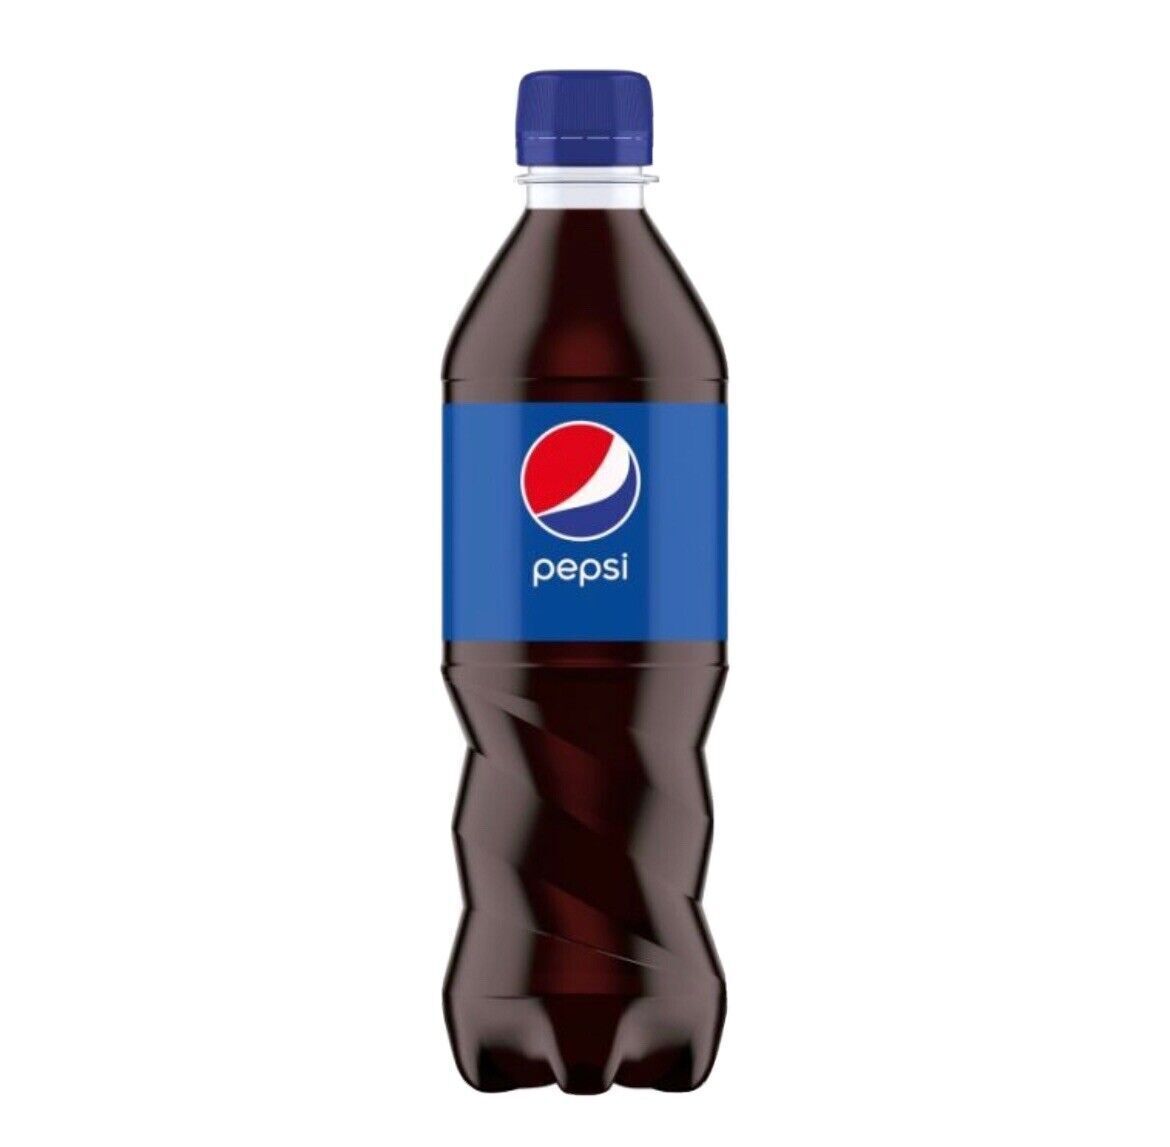 Pepsi 500ml Pack of 12